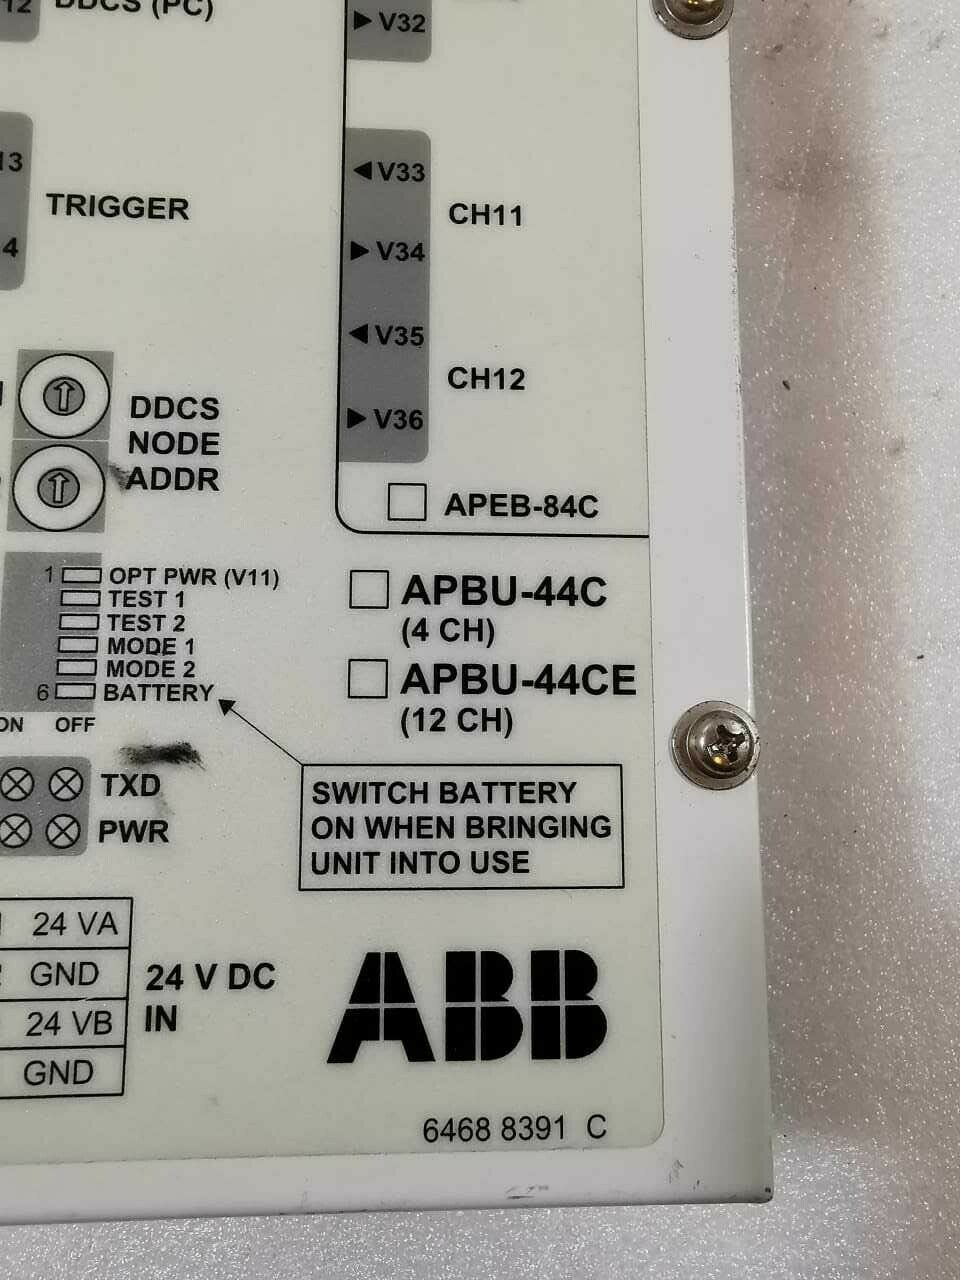 Jual ABB APBU-44C - Kab. Bekasi - Code